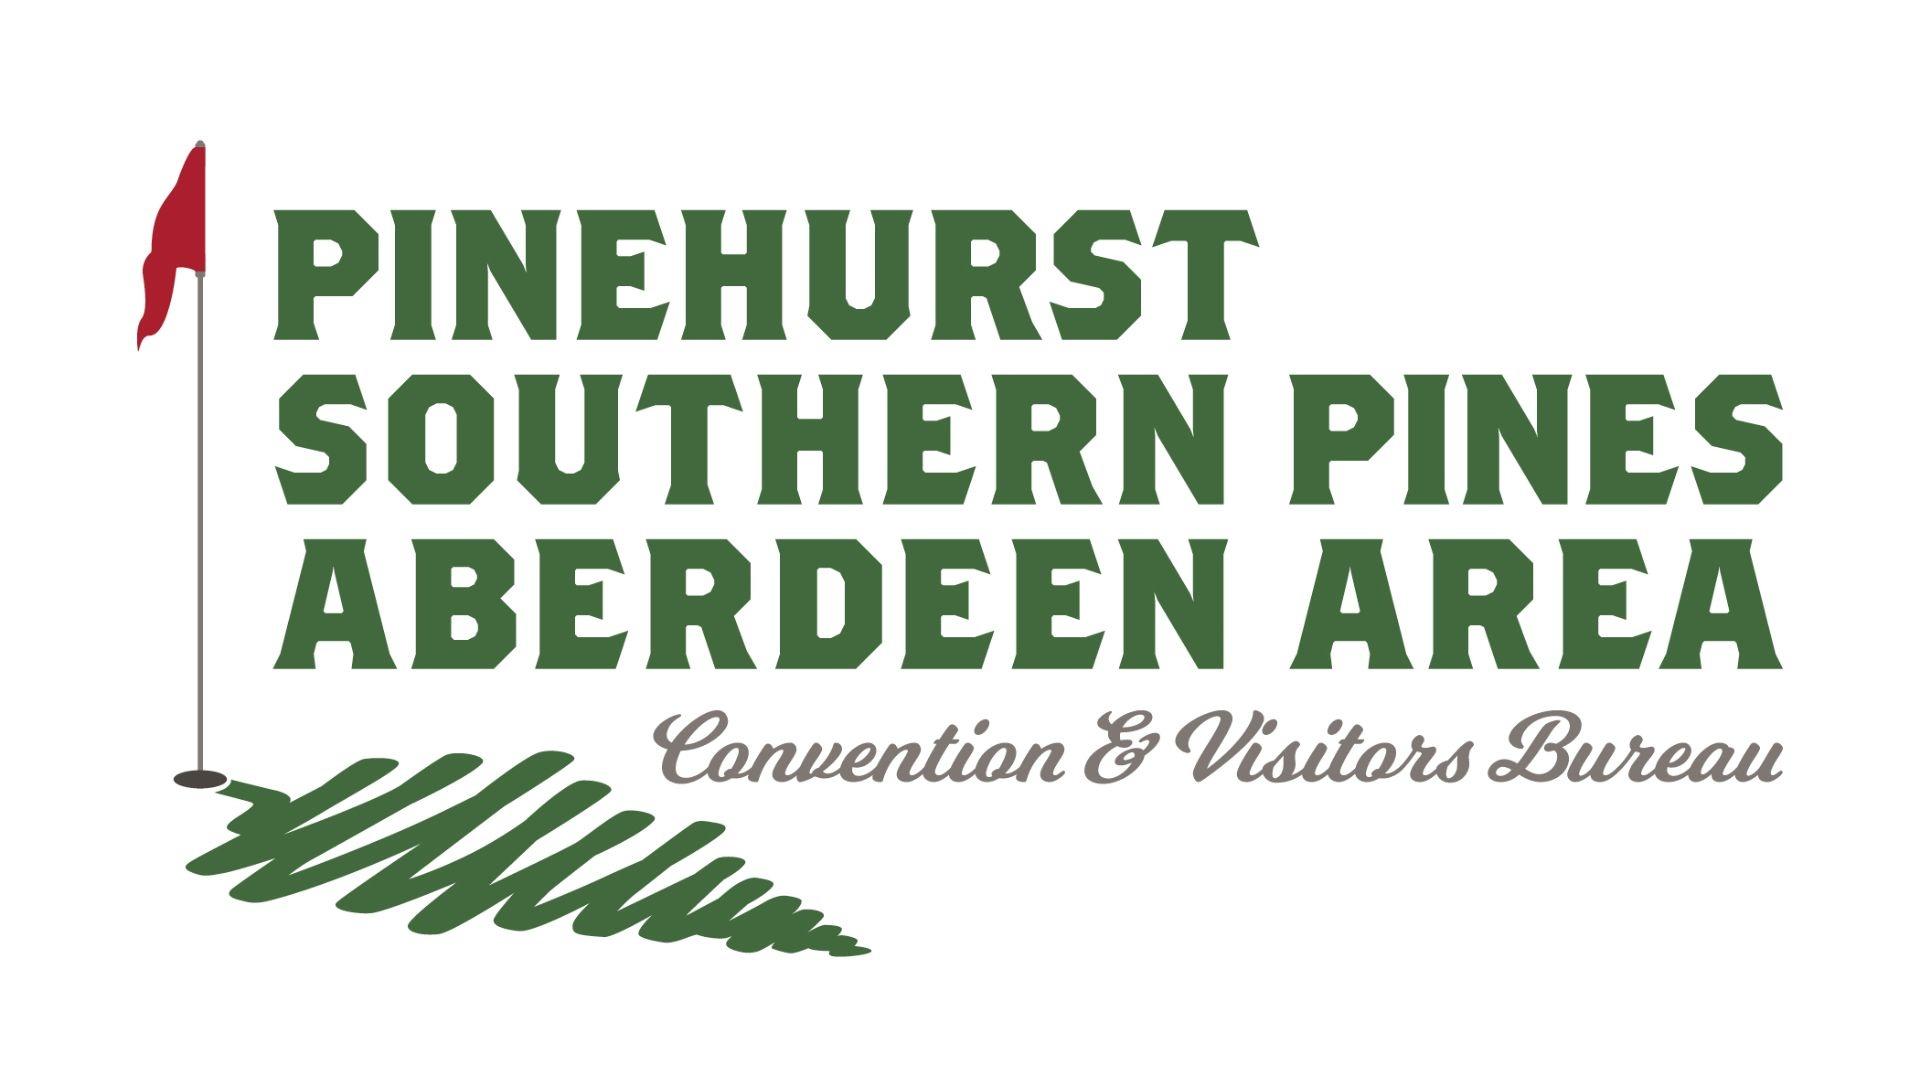 Pinehurst Southern Pines Aberdeen Area Convention & Visitors Bureau logo.